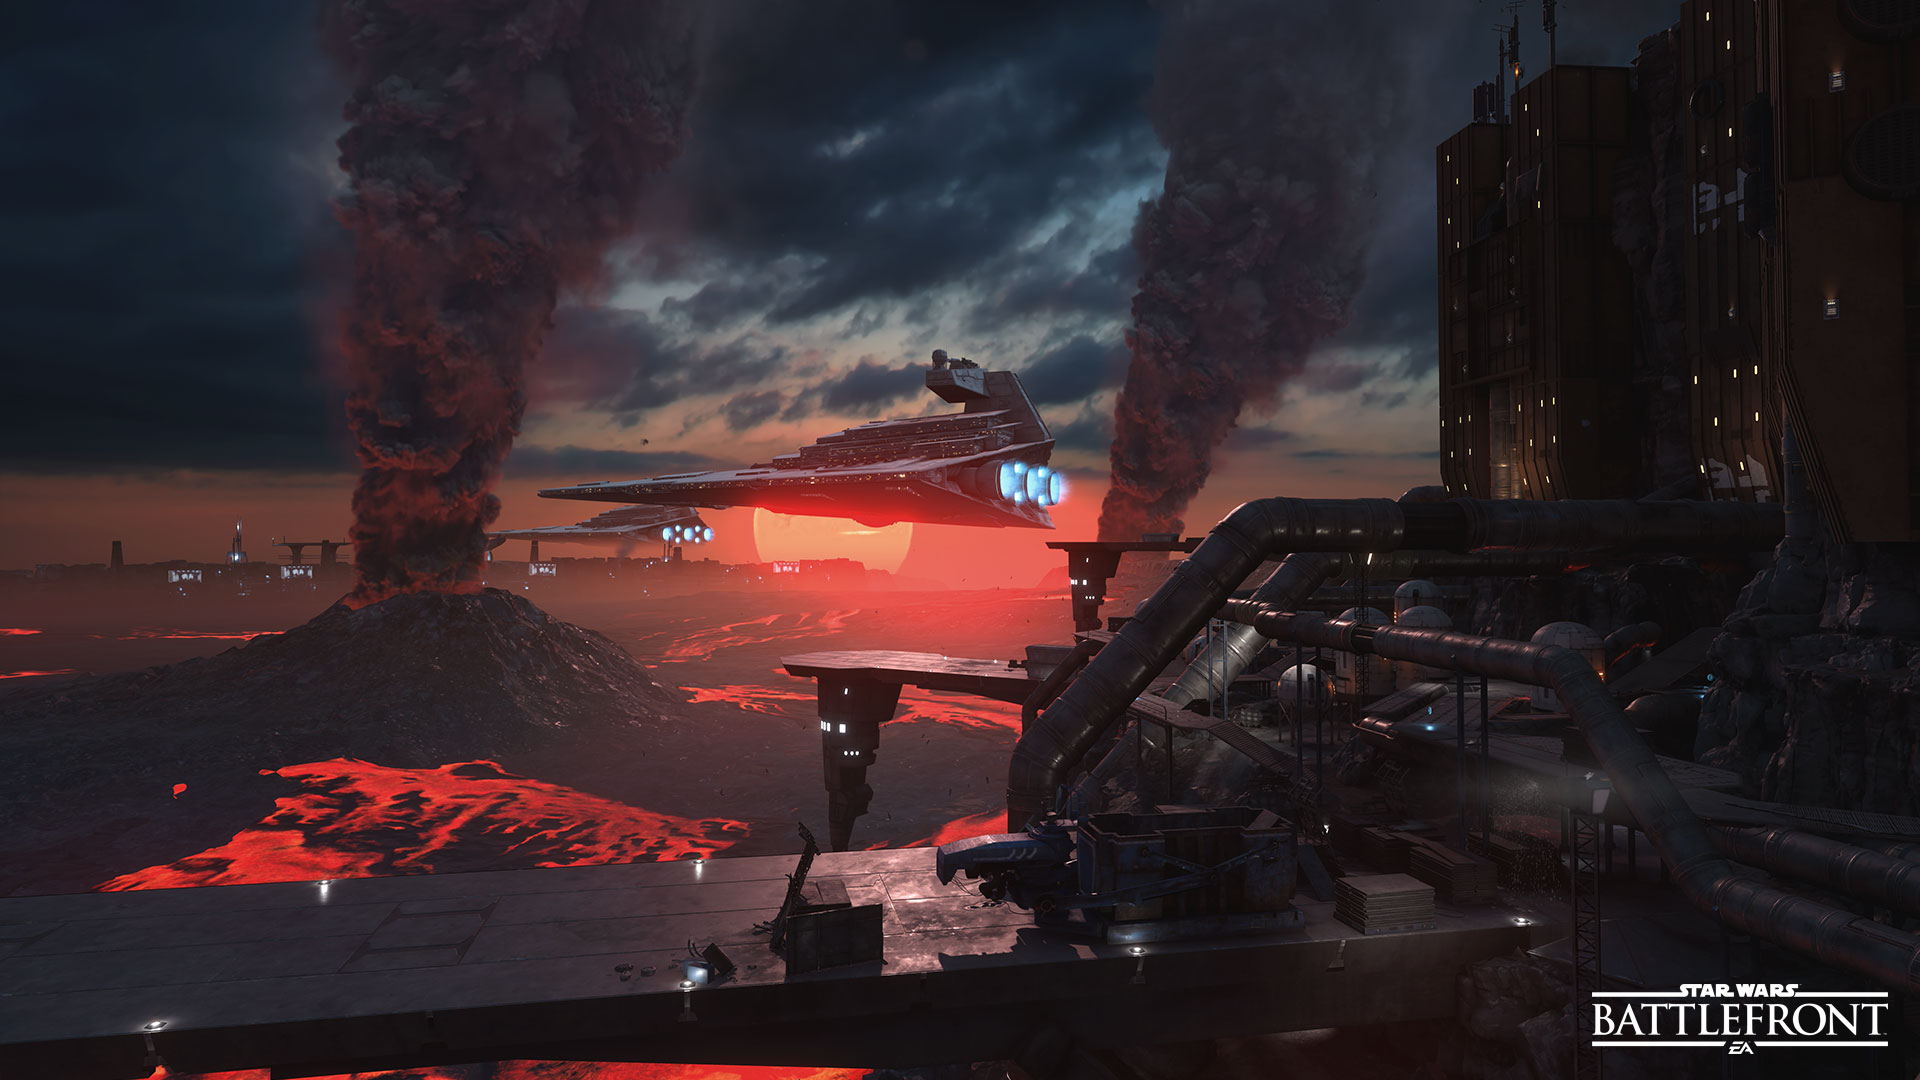 Star Wars: Battlefront - Outer Rim screenshot 6462